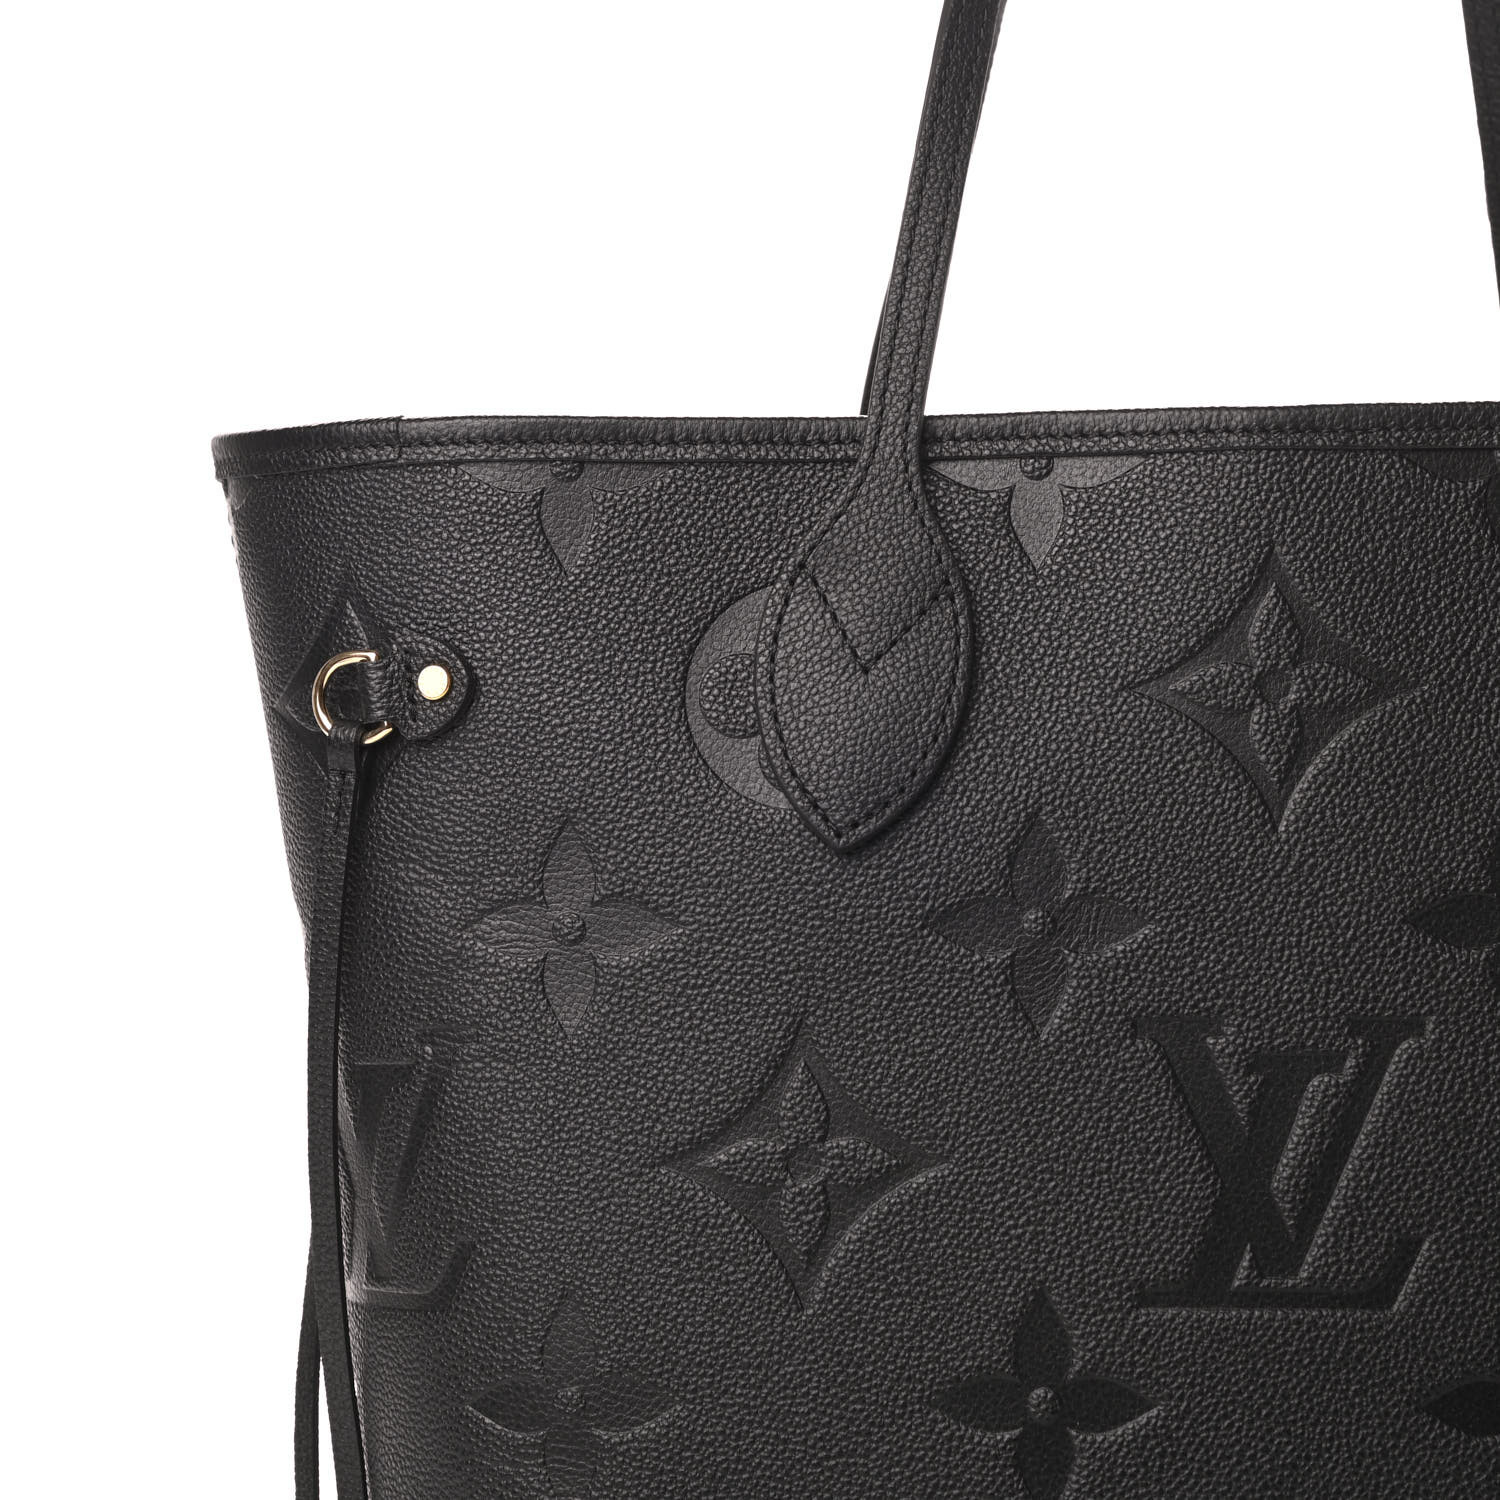 Introducing the Louis Vuitton Monogram Jungle Collection - PurseBlog